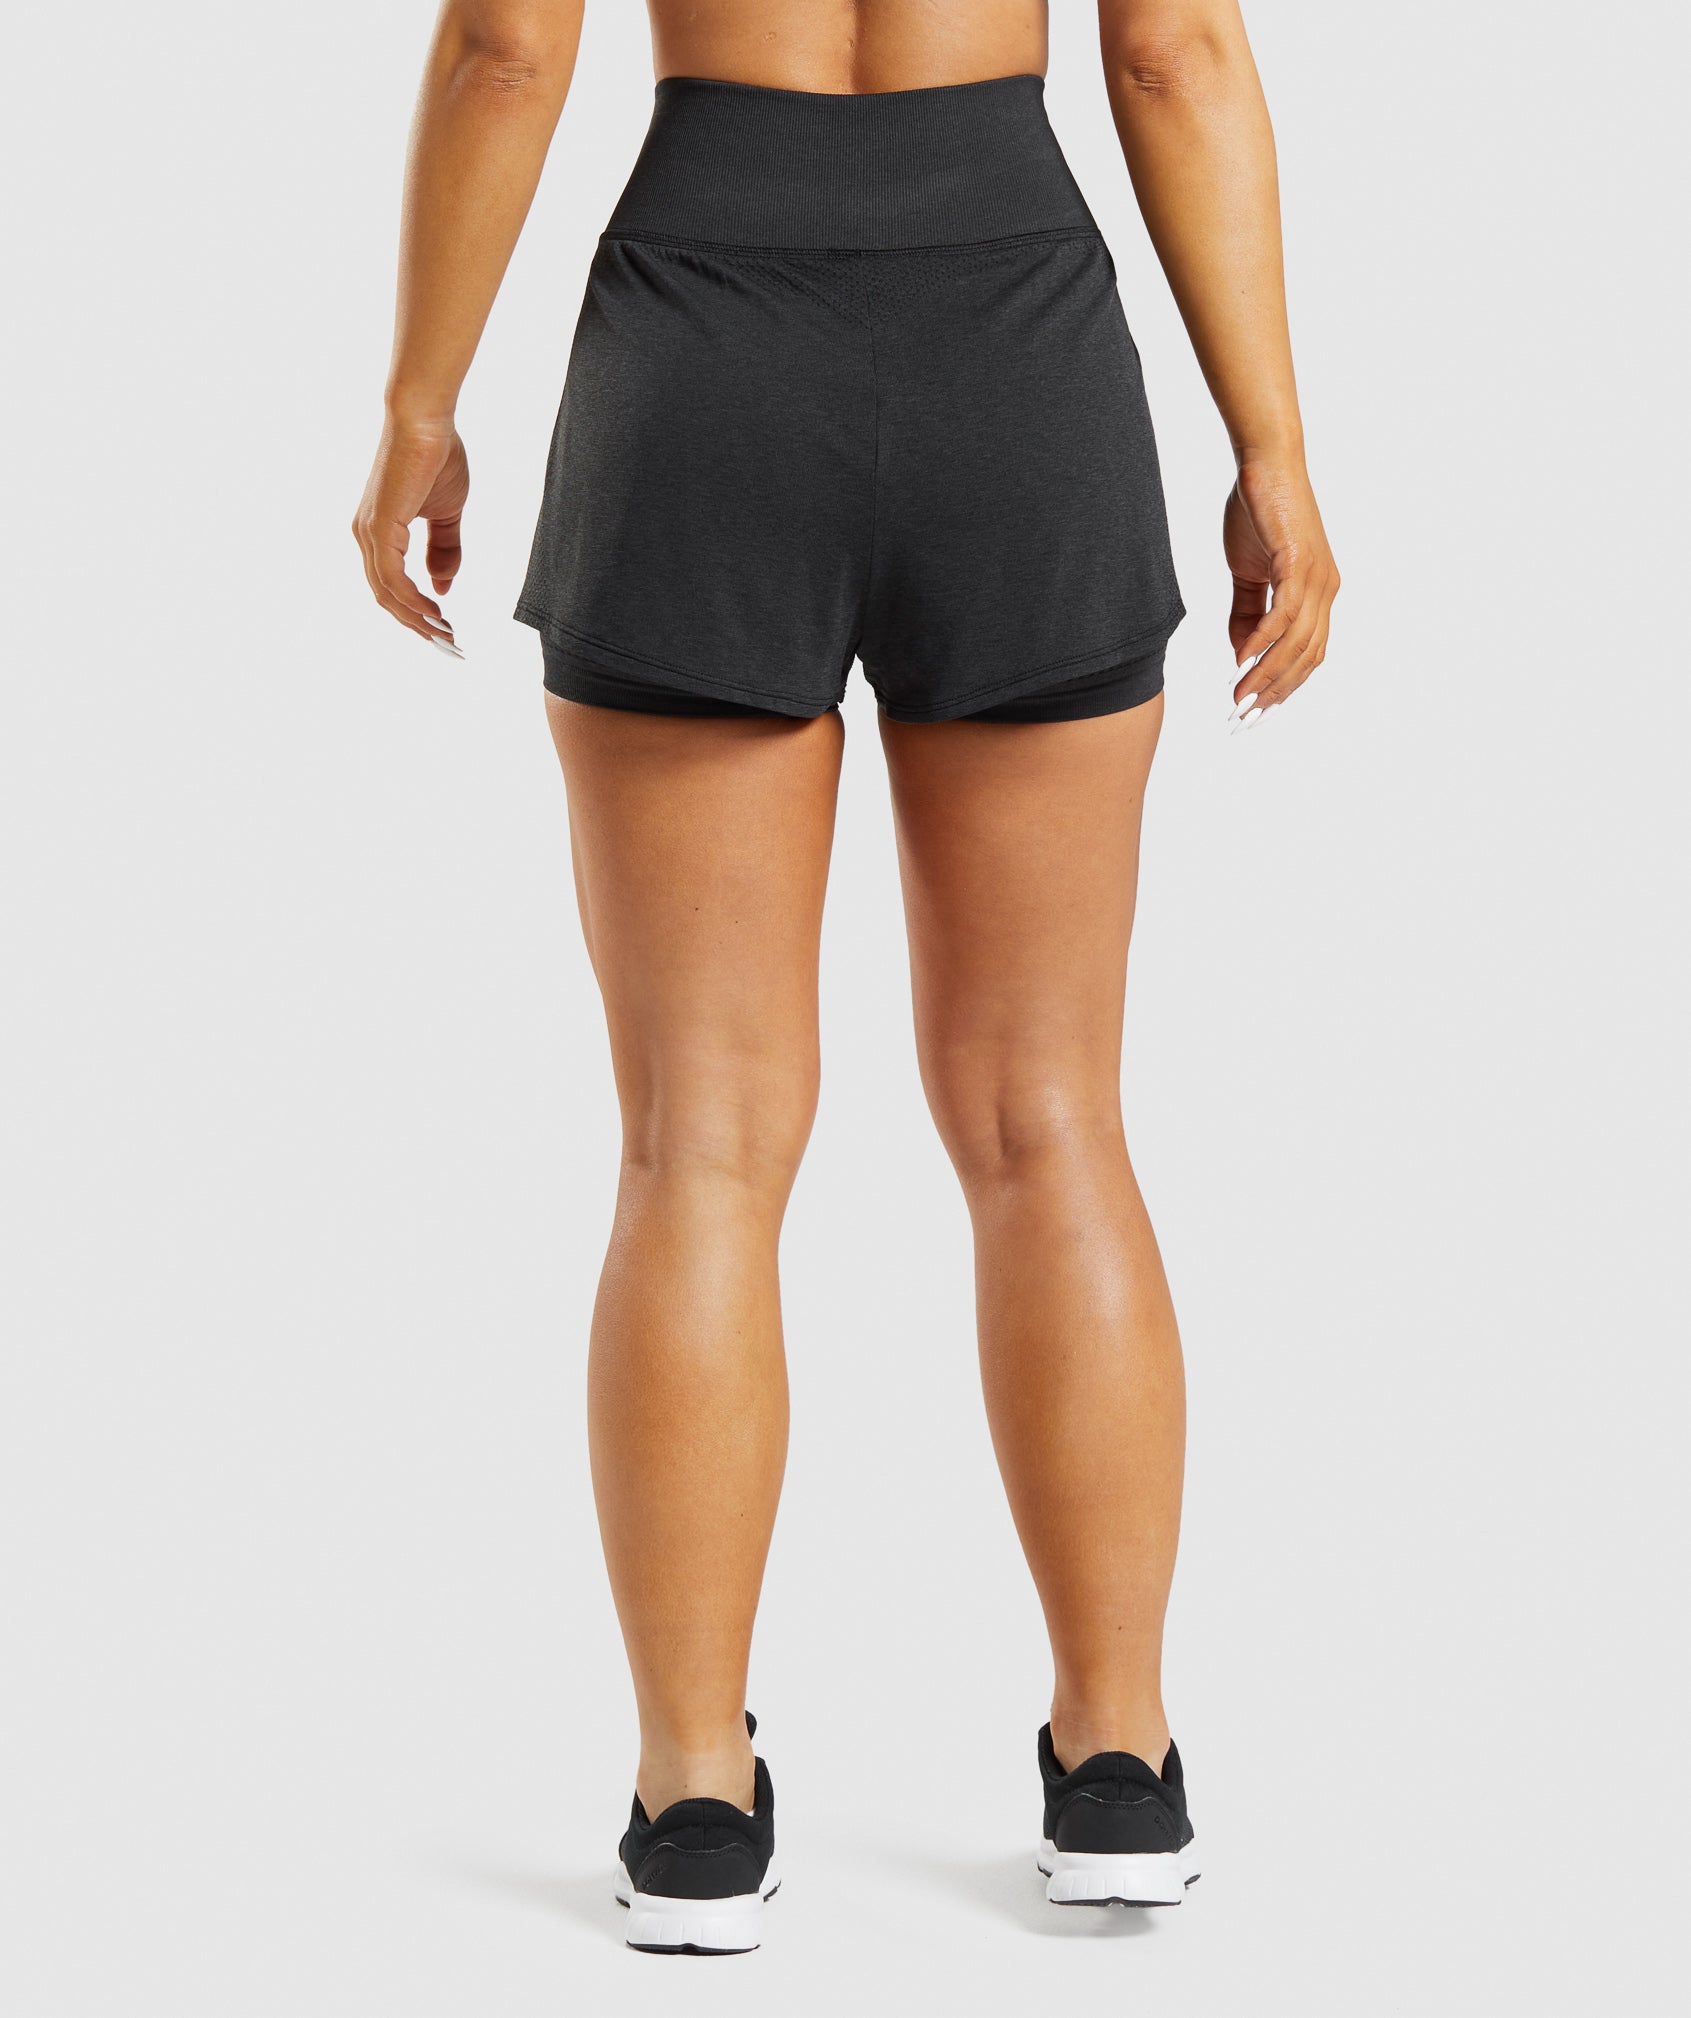 Vital Seamless 2.0 2-in-1 Shorts in Black Marl - view 2